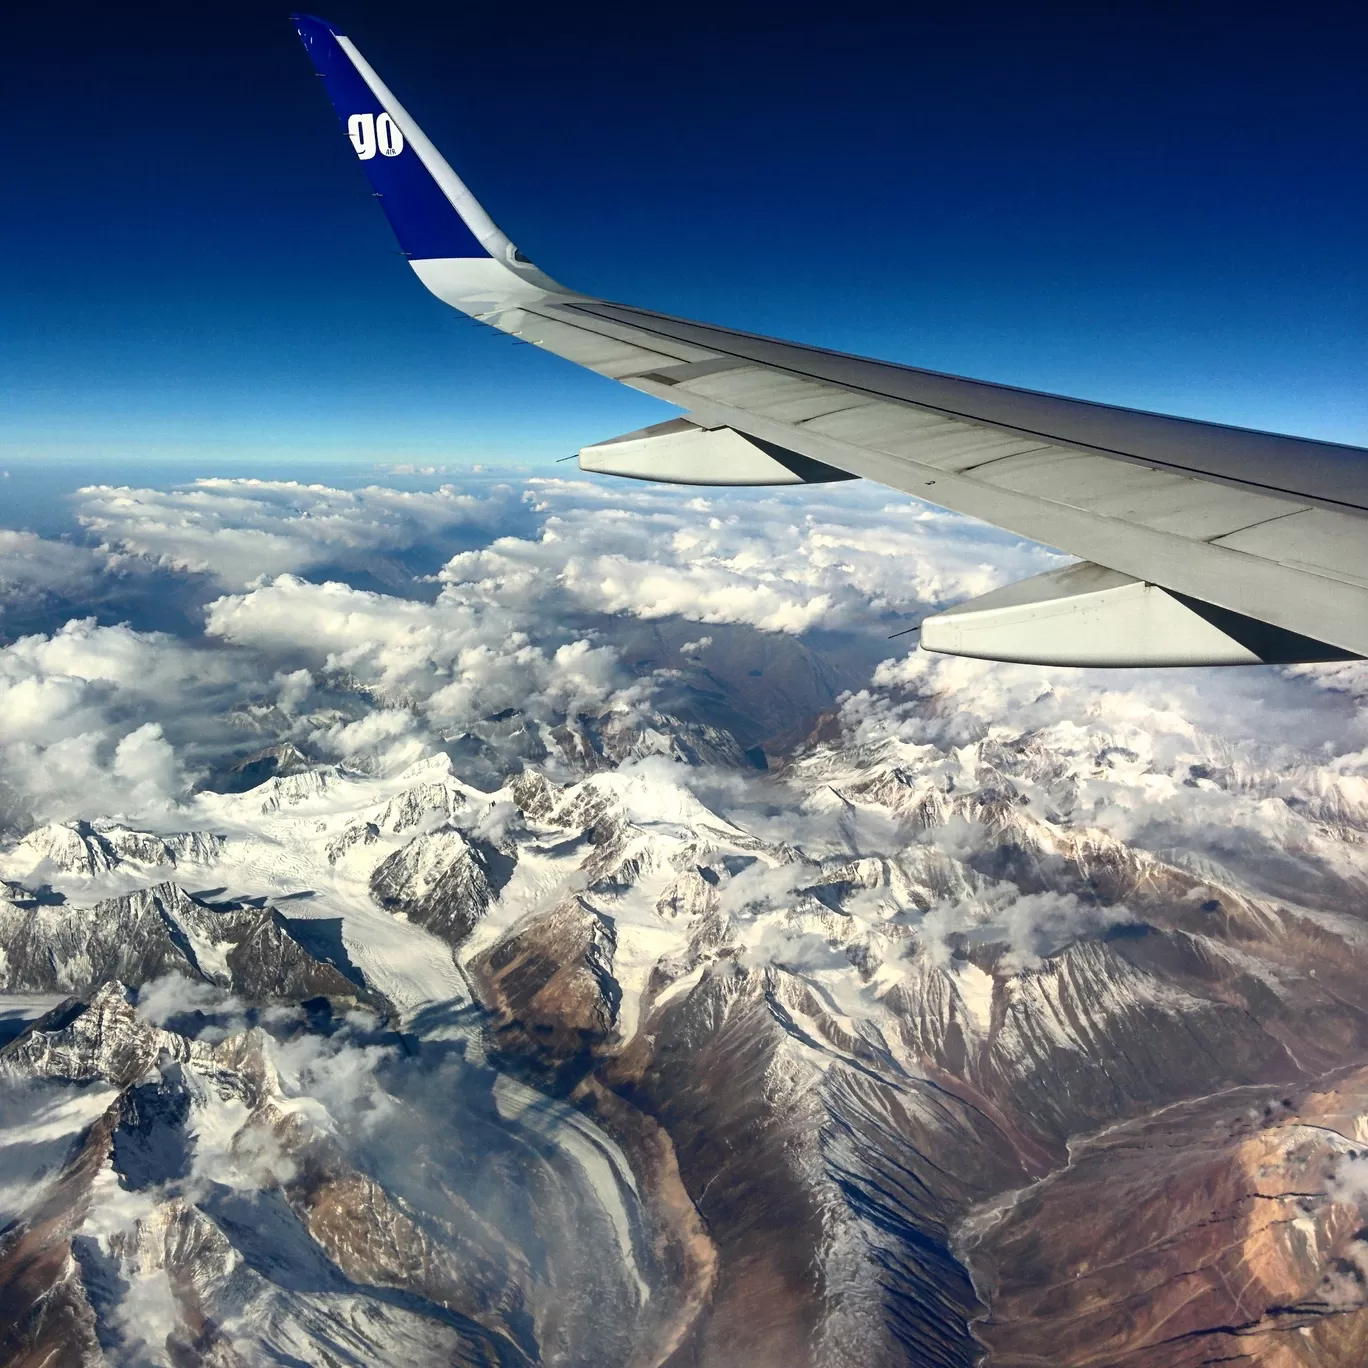 Photo of Himalayas By Gwyneth Pereira